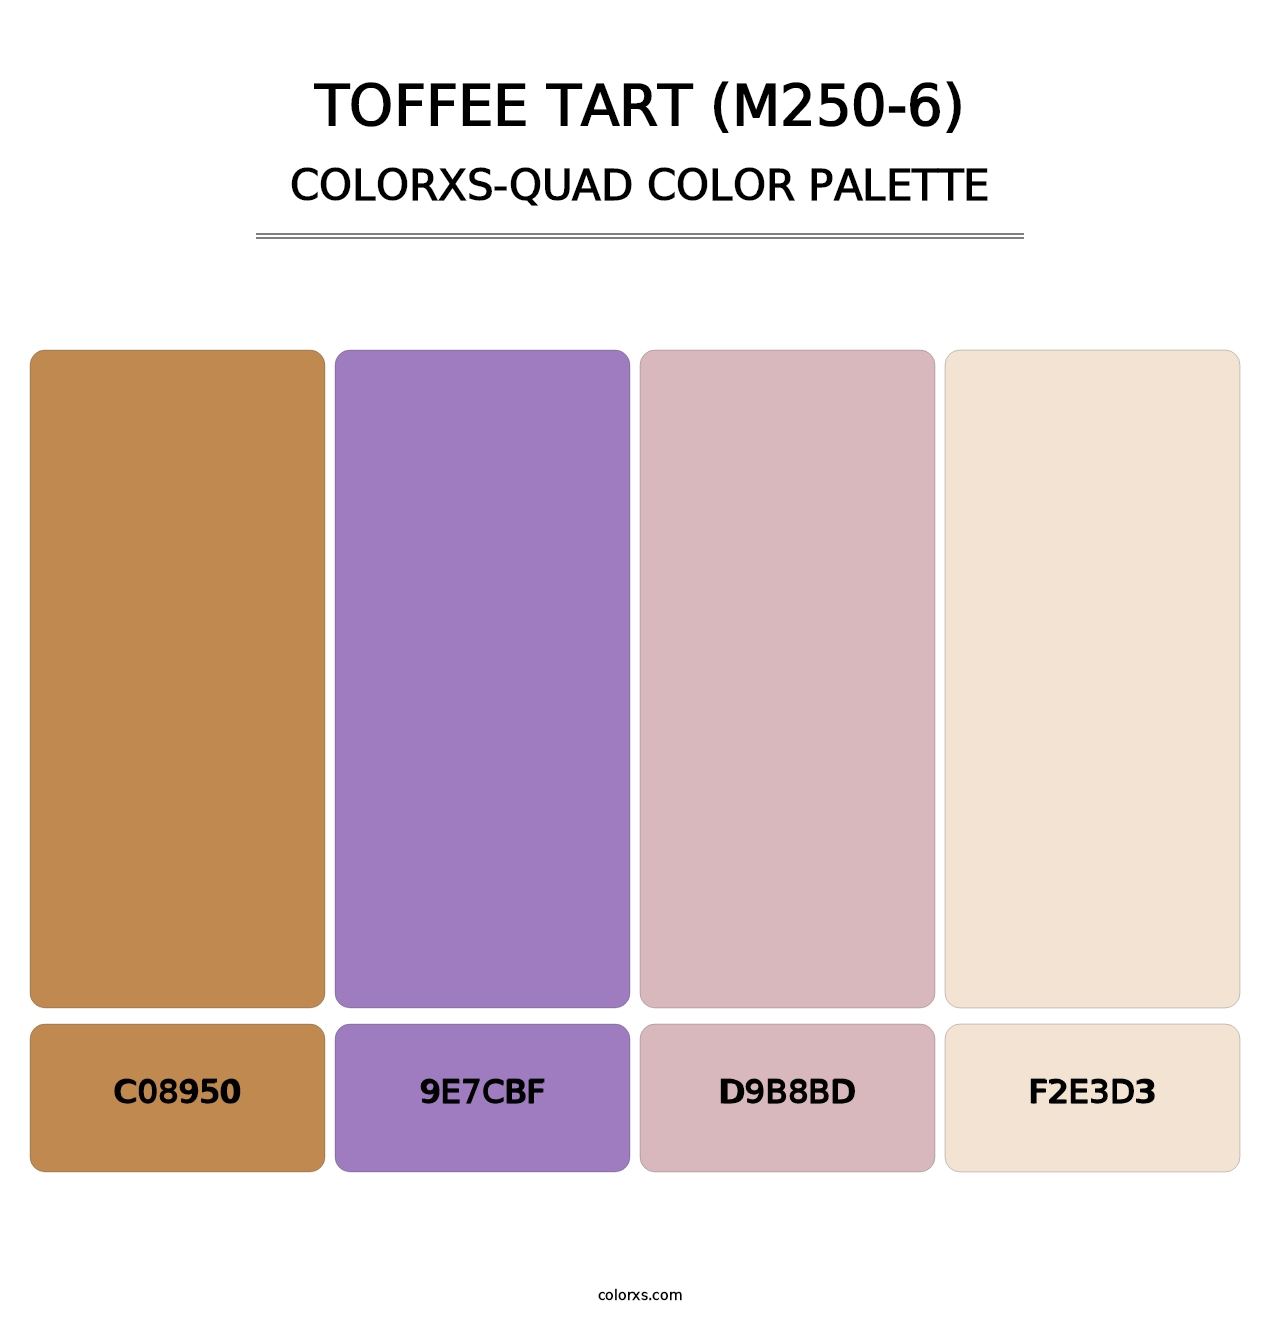 Toffee Tart (M250-6) - Colorxs Quad Palette